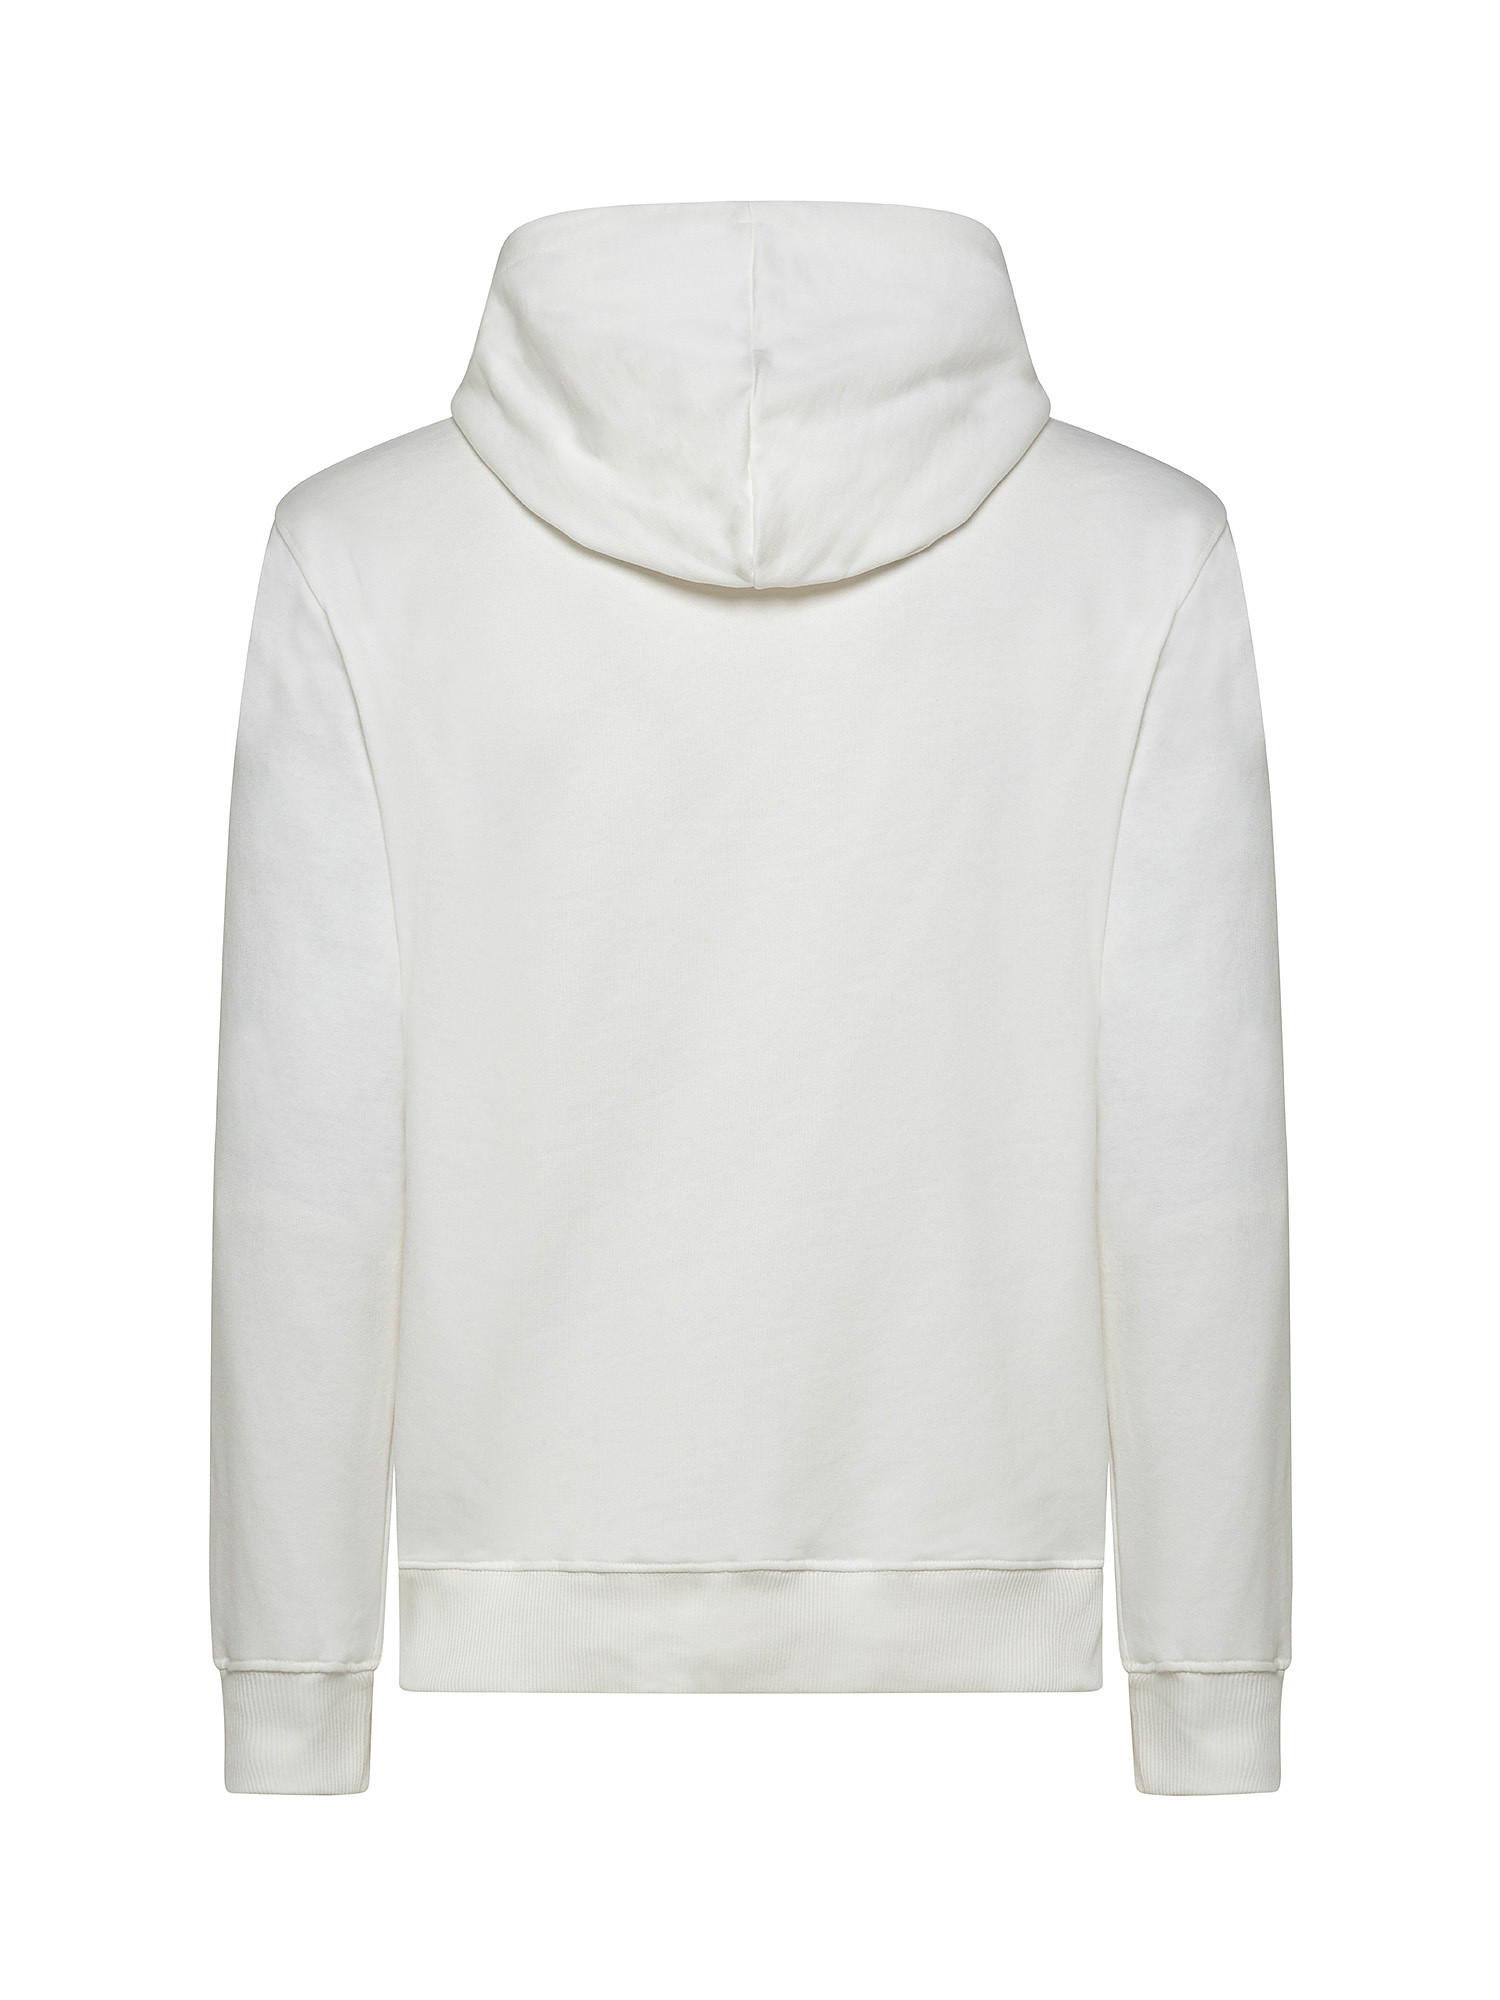 Sweatshirt with print, White, large image number 1